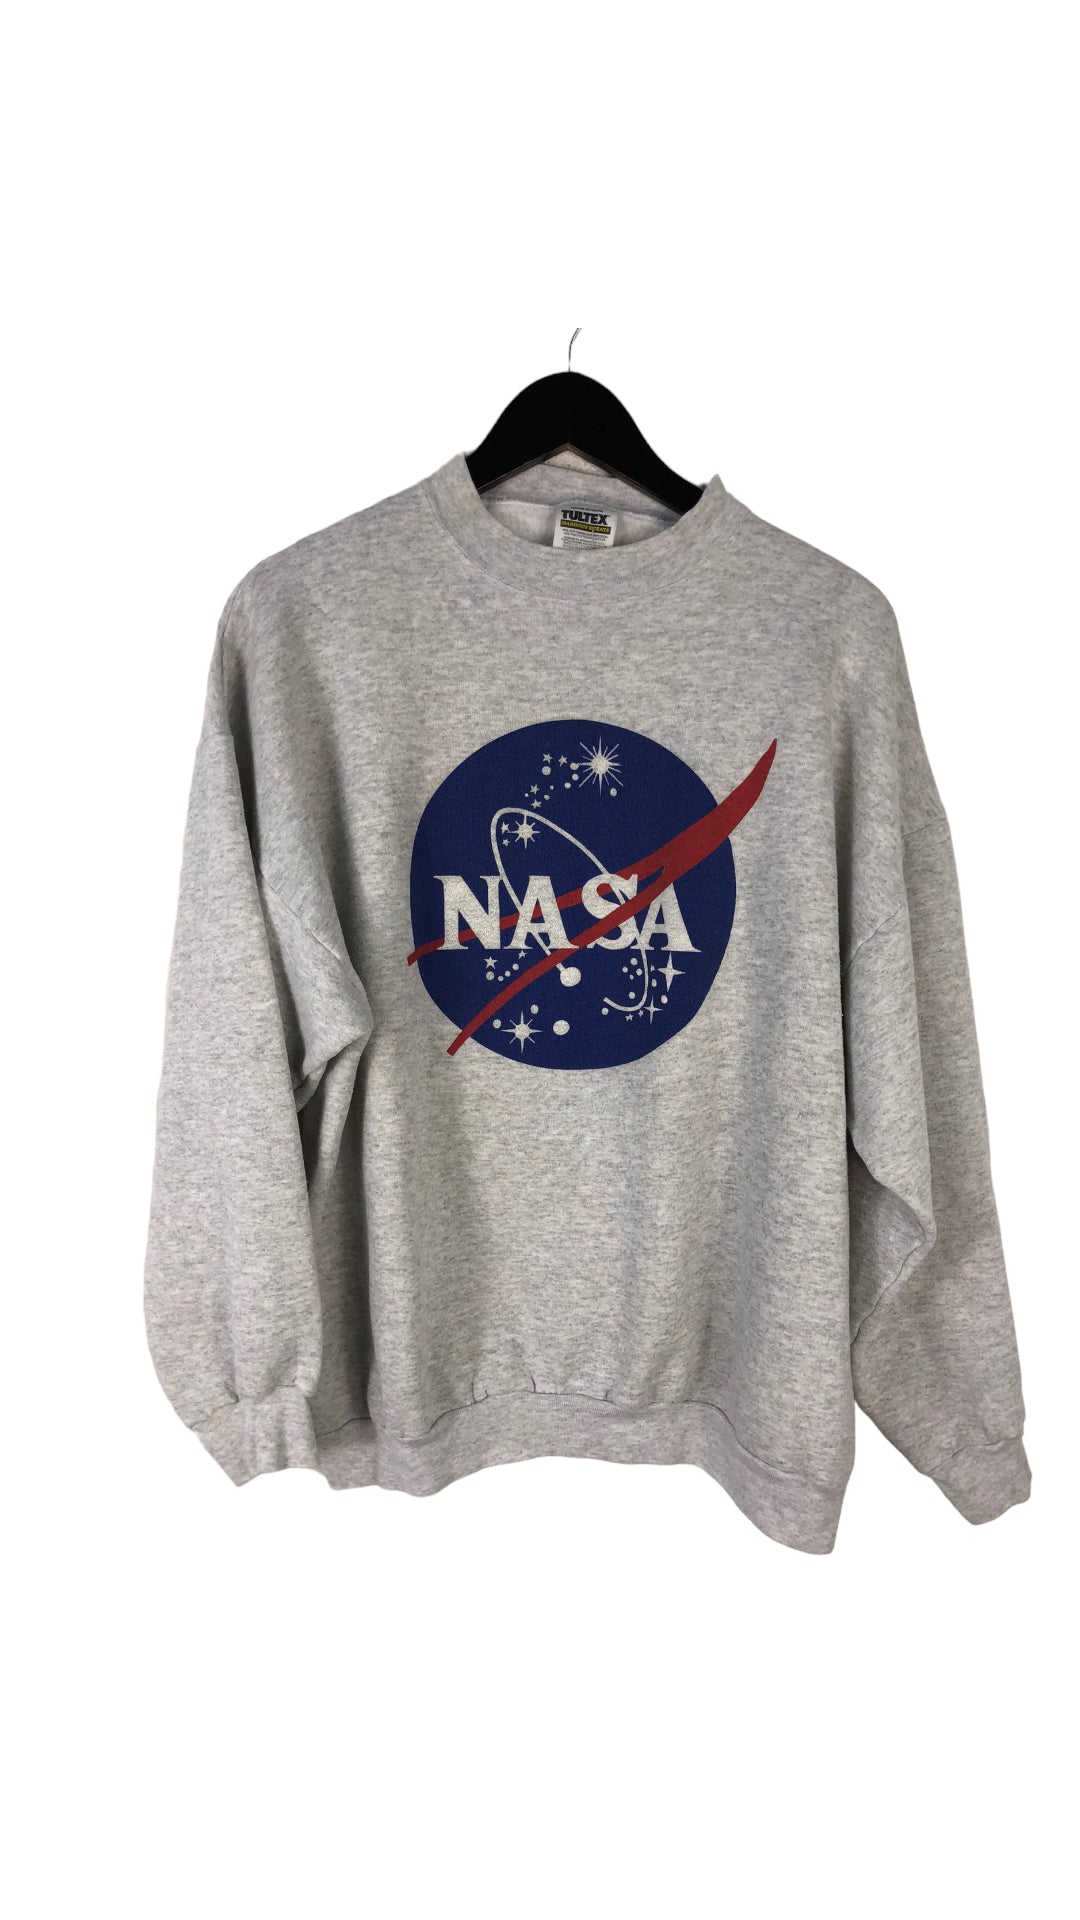 VTG Gray NASA Sweater Sz XL